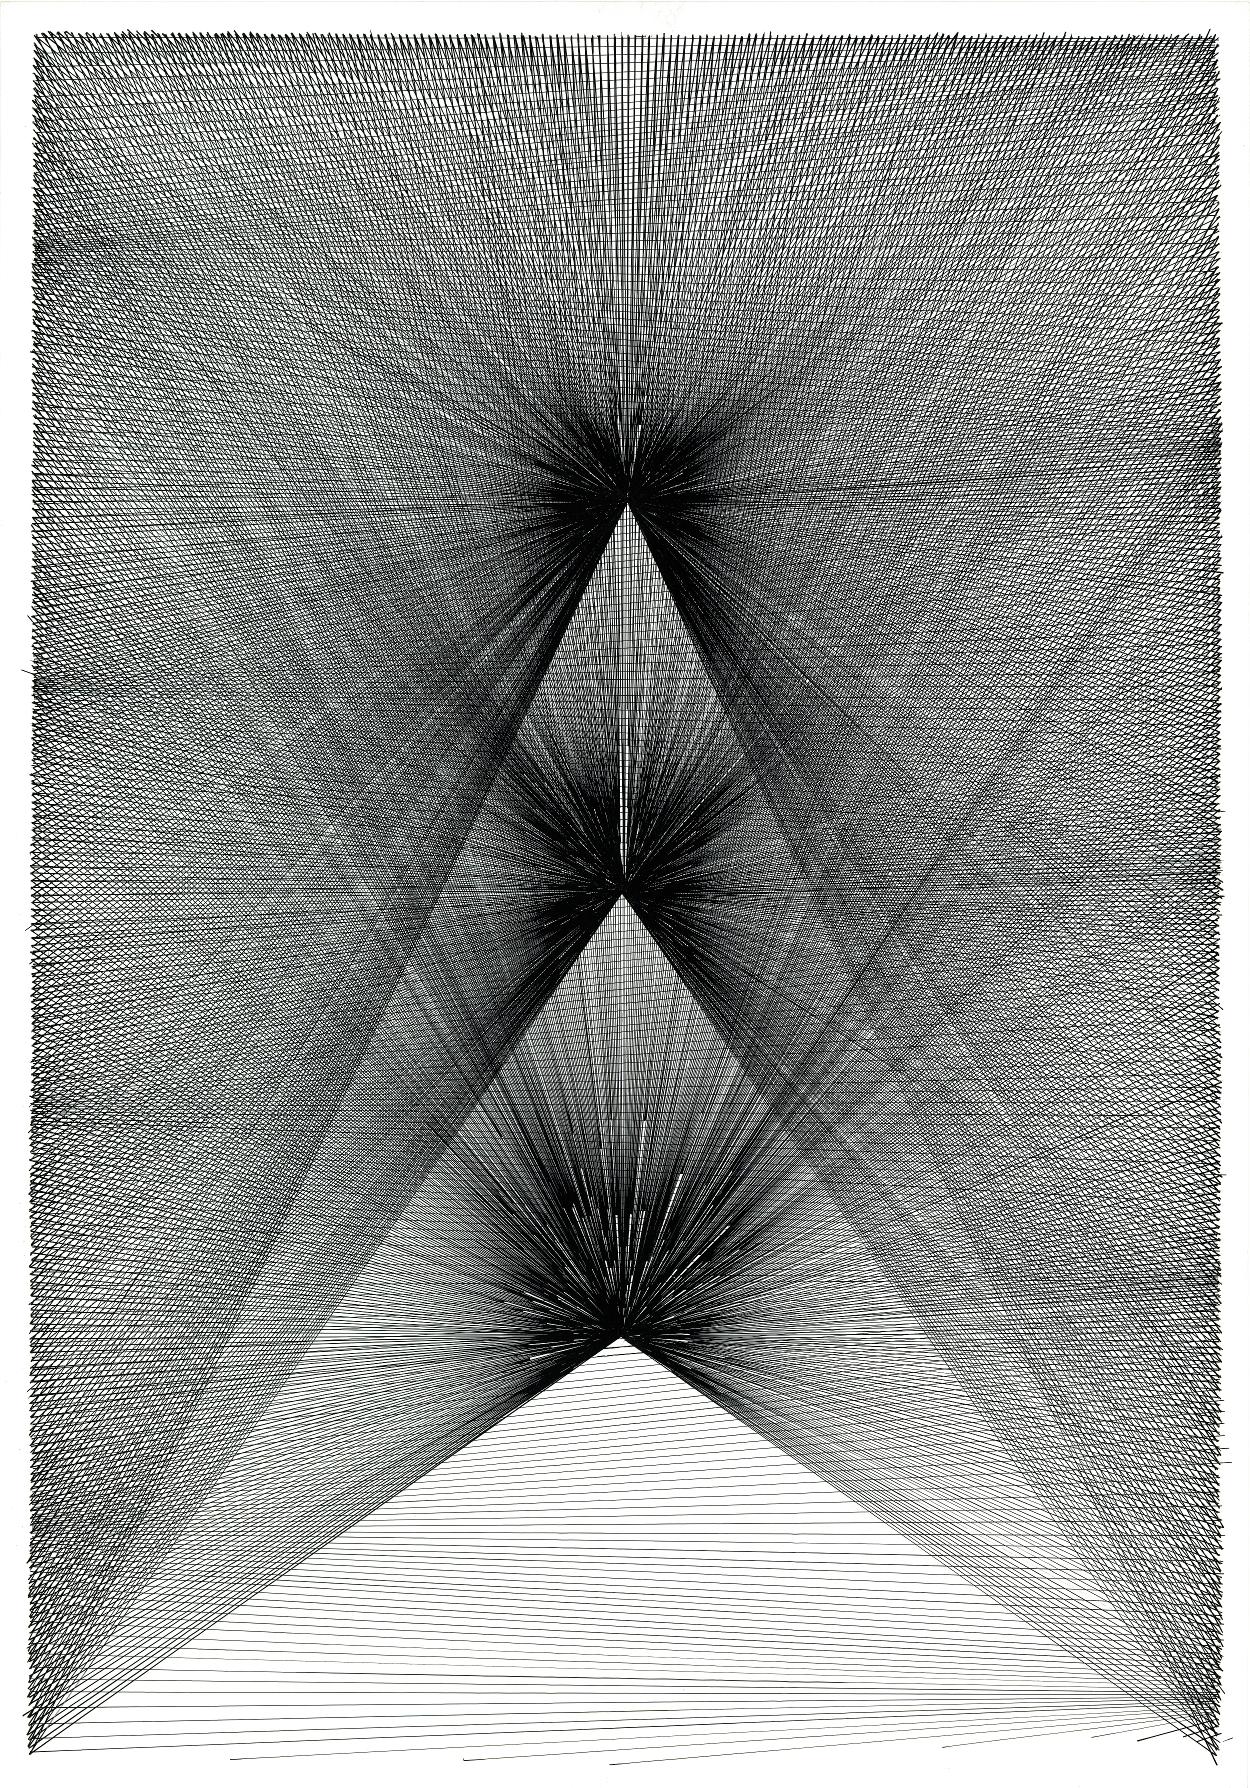 Abstract Drawing Andrew Bator - Mes trois grilles, dessin, stylo et encre sur papier